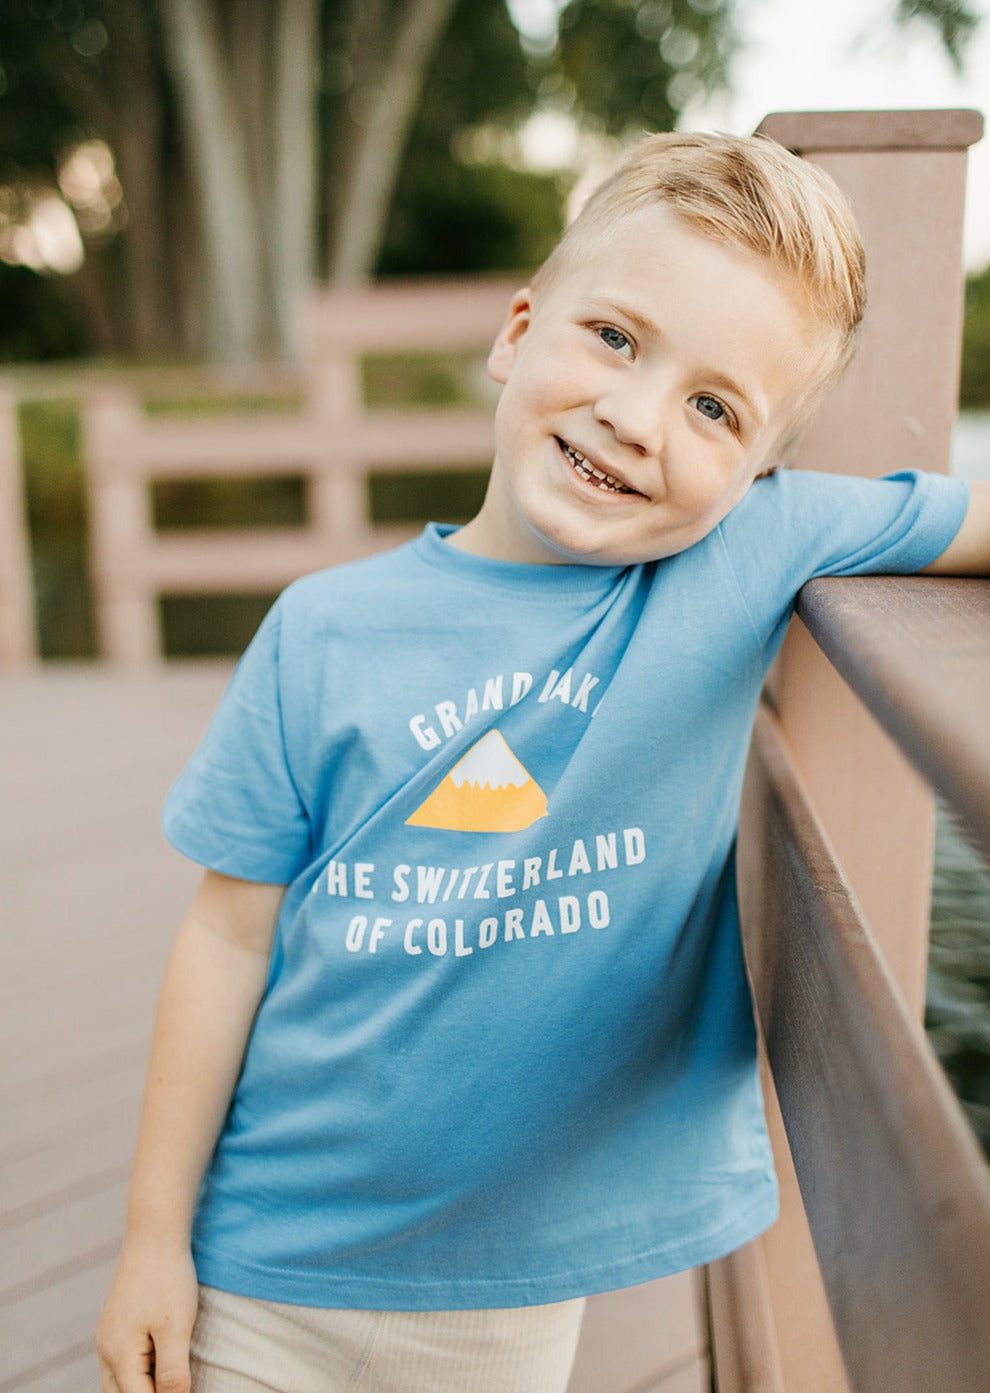 The Switzerland of Colorado Kids T-Shirt